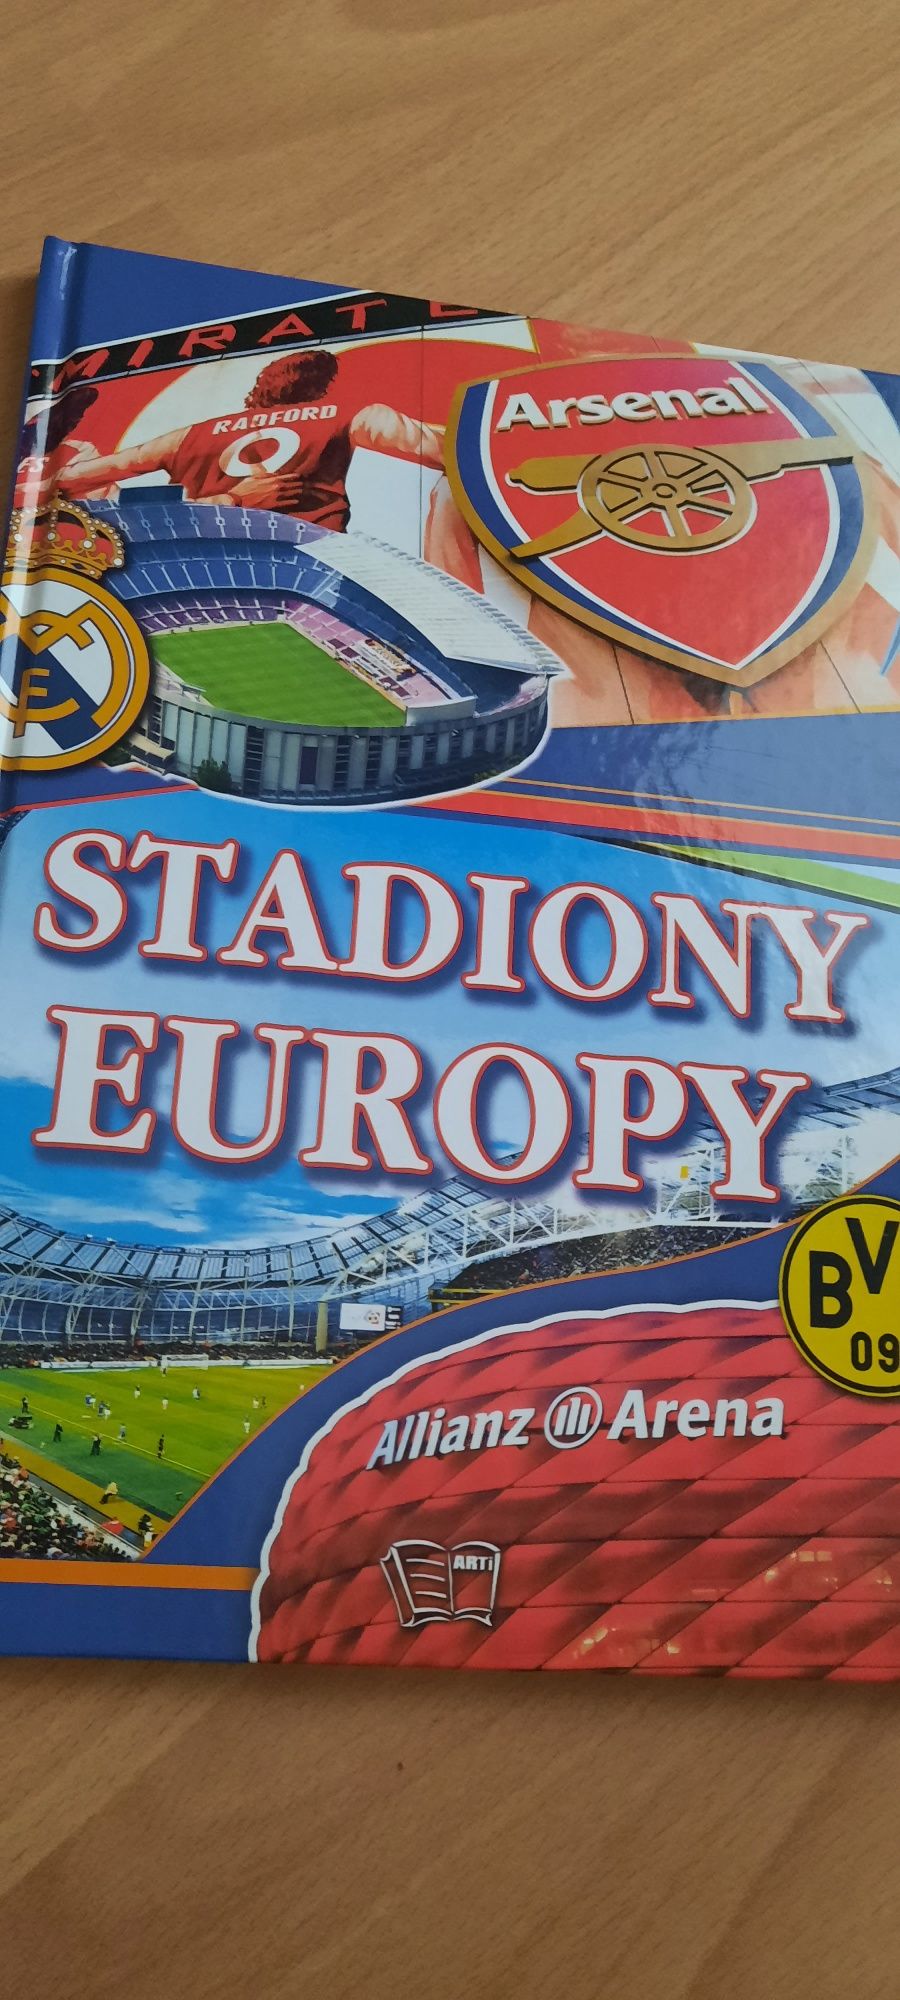 Stadiony Europy album